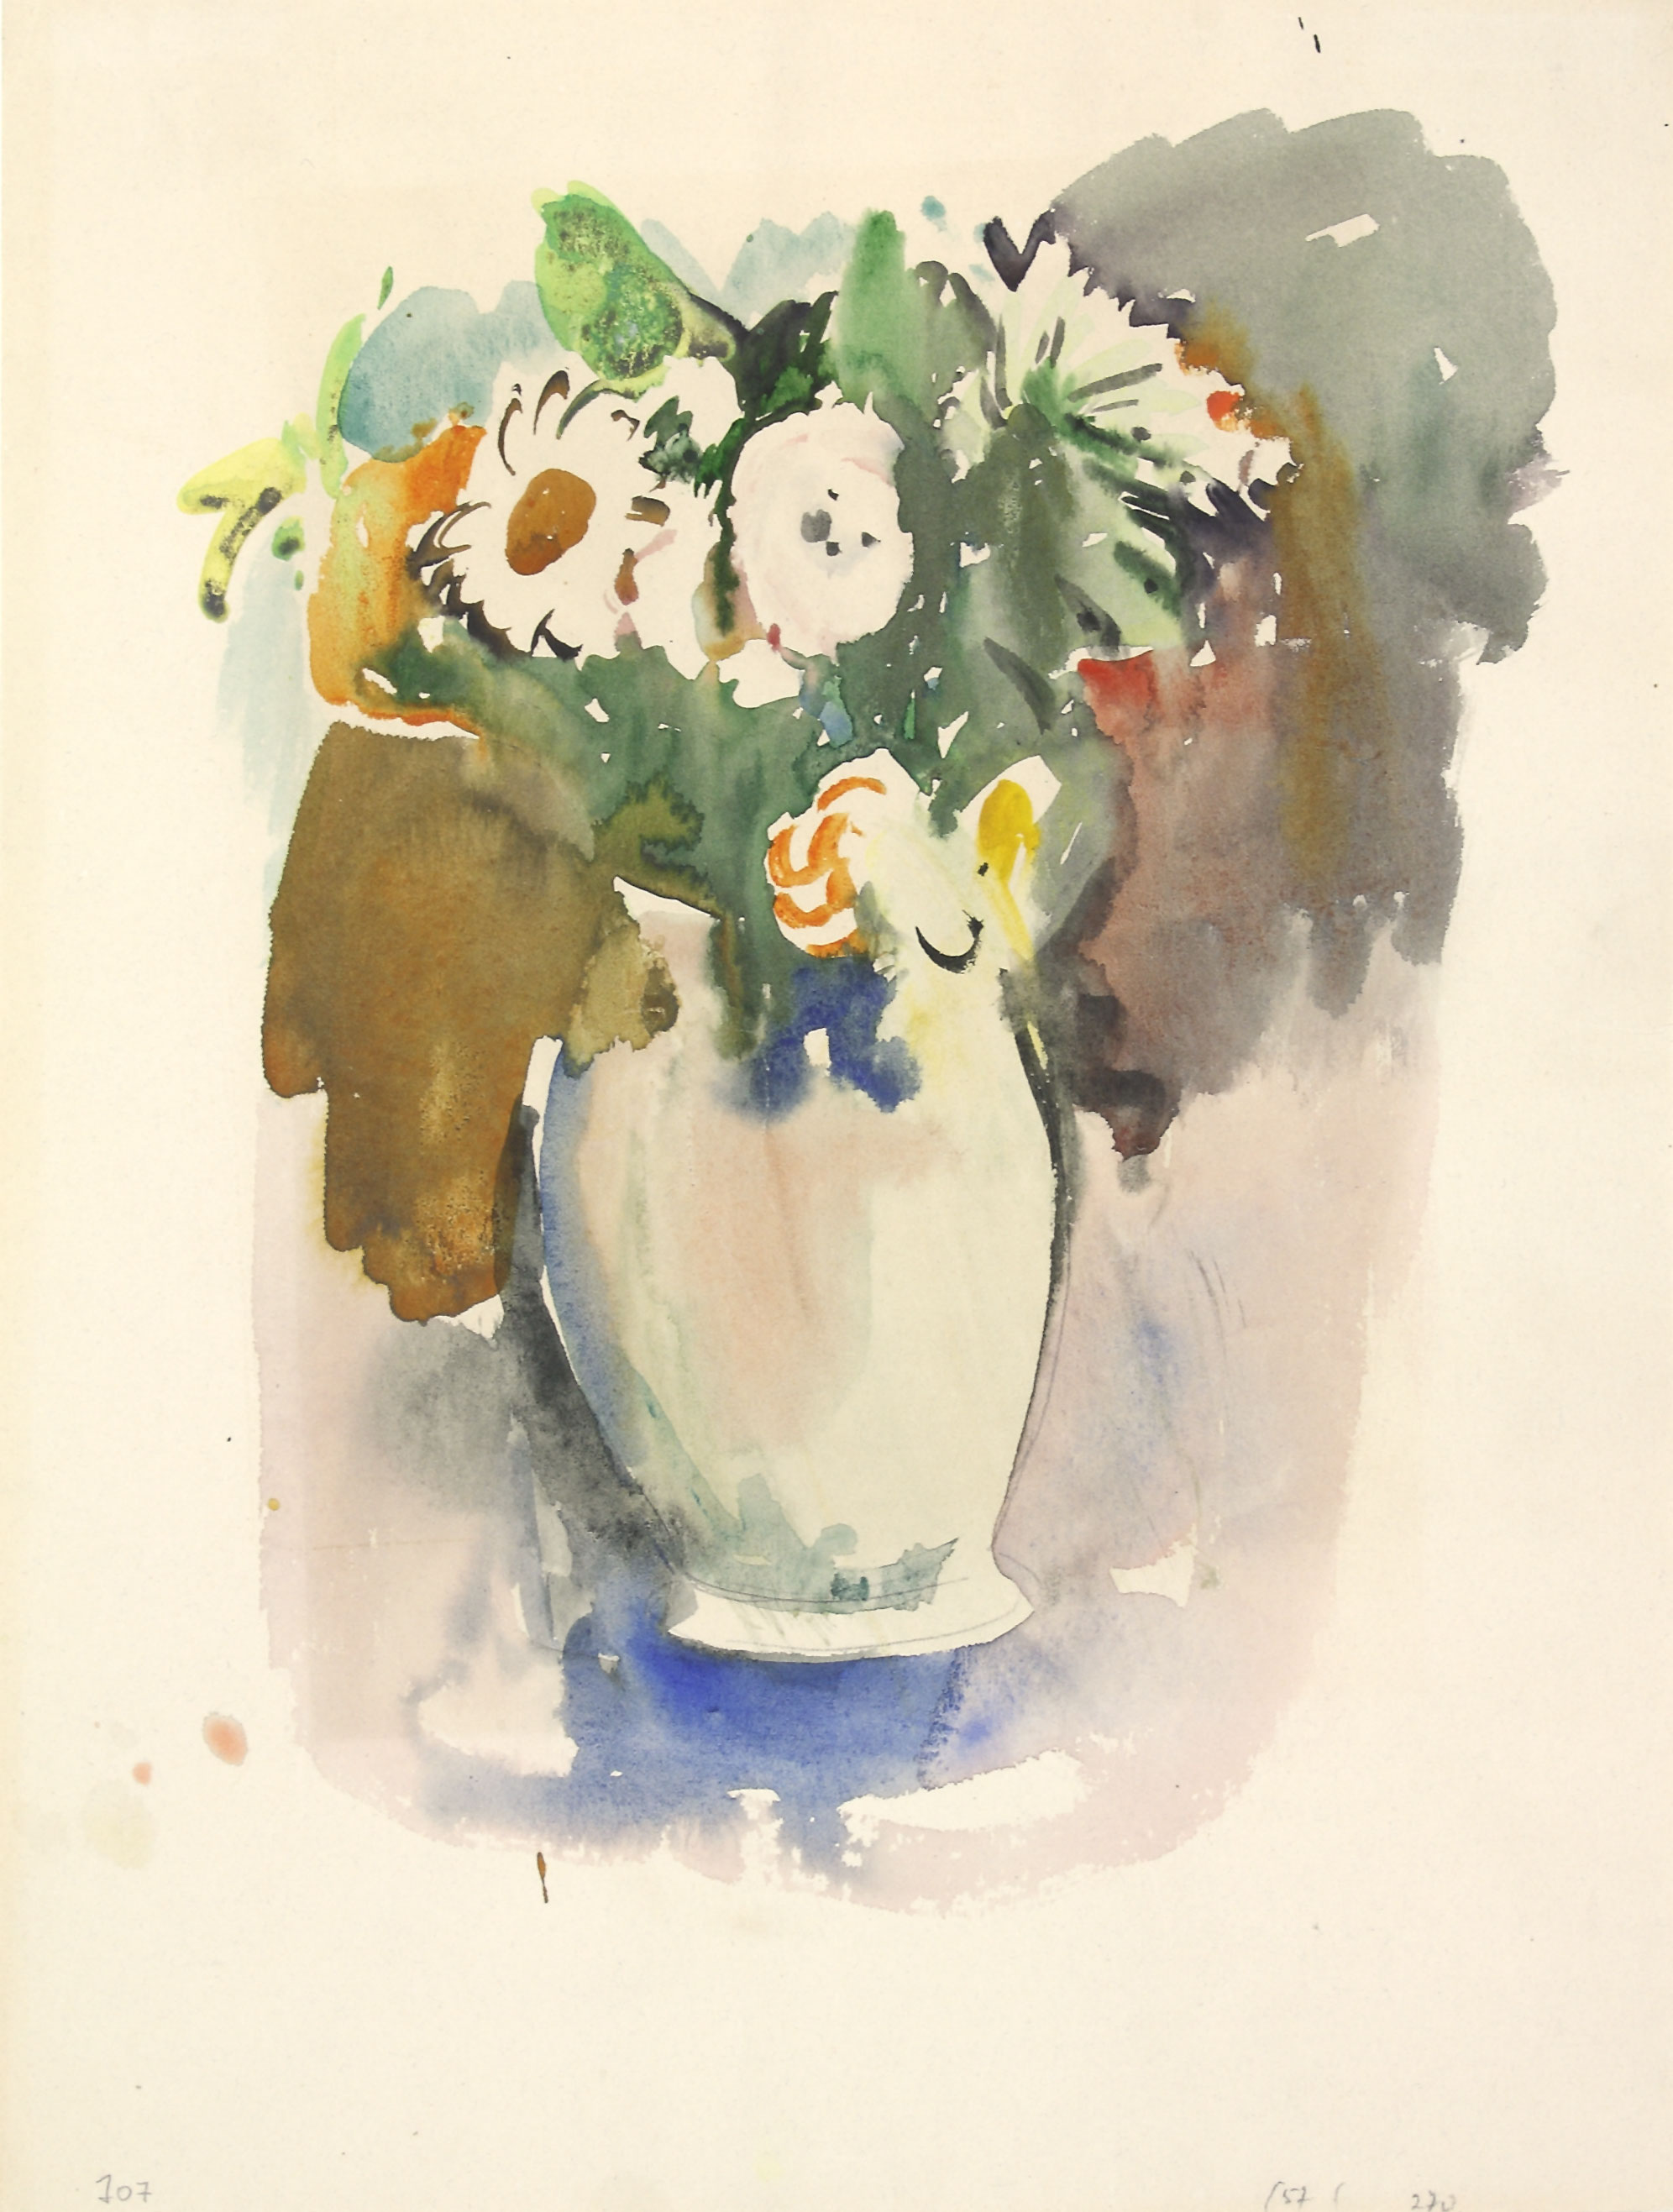 Auktionshaus Quentin Berlin RÃ¡gÃ³czy  Joachim (1895 Bonn - 1975 Berlin) / Vase mit BlumenstrauÃ. Aquarell auf beigem Velin  rÃ¼ckseitig Stillleben mit Obst. Um 1930. 32